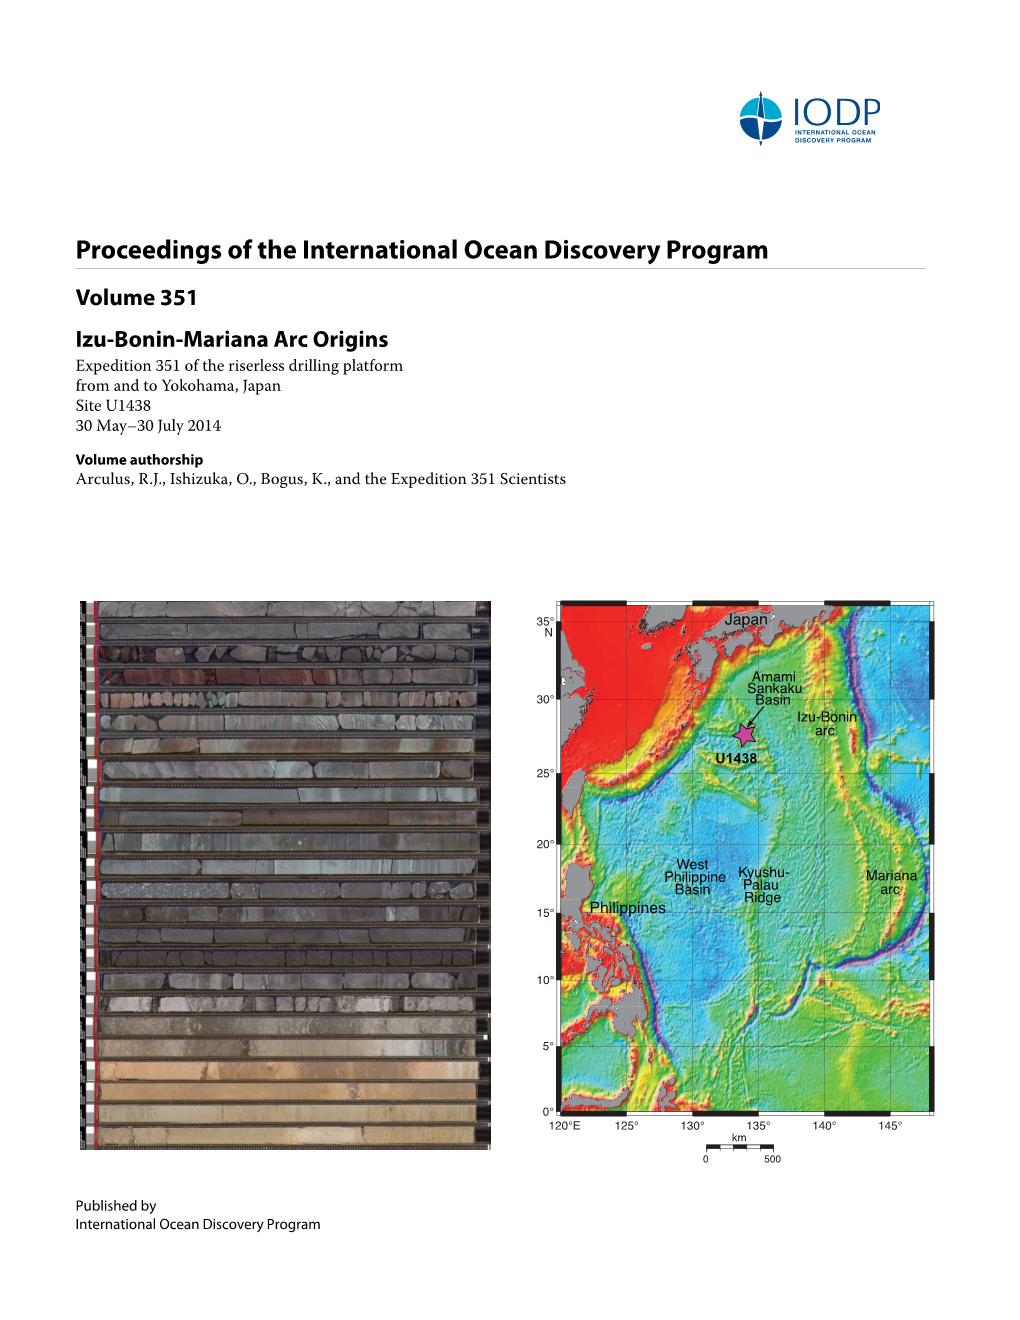 Proceedings of the International Ocean Discovery Program Volume